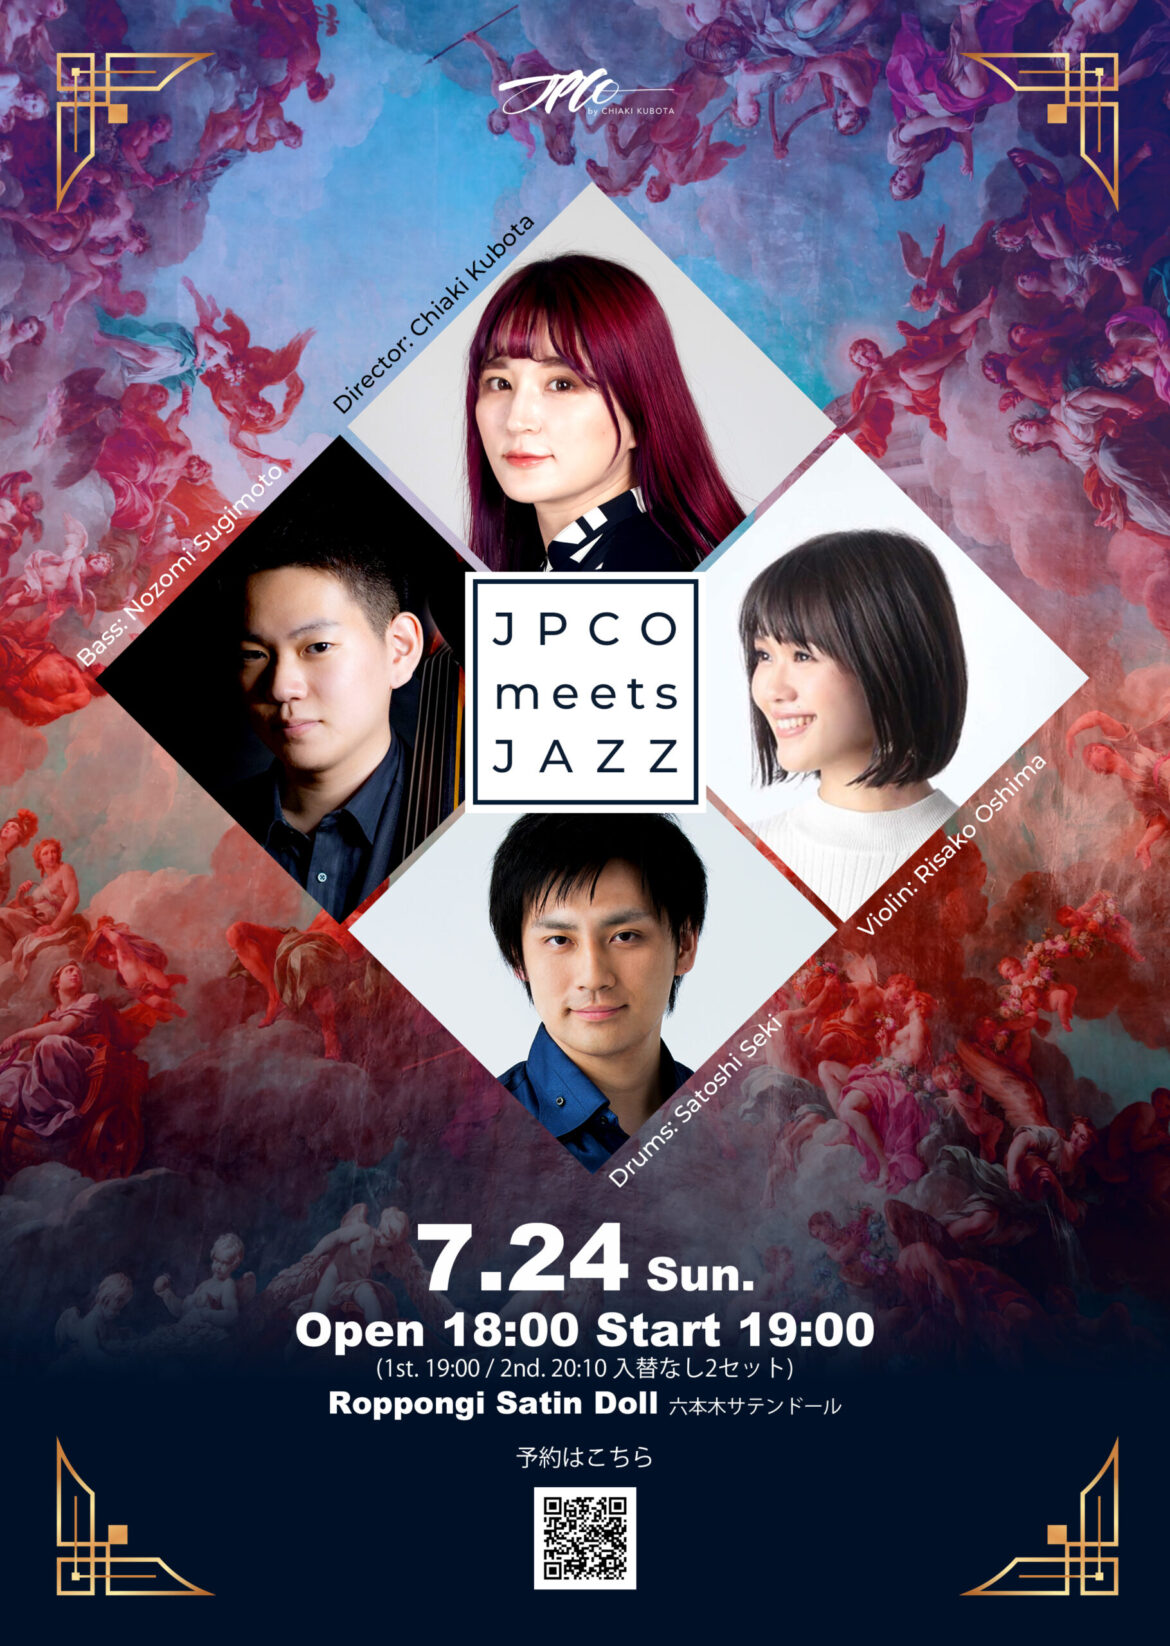 2022.7.24 【開催延期】JPCO meets JAZZ vol.1